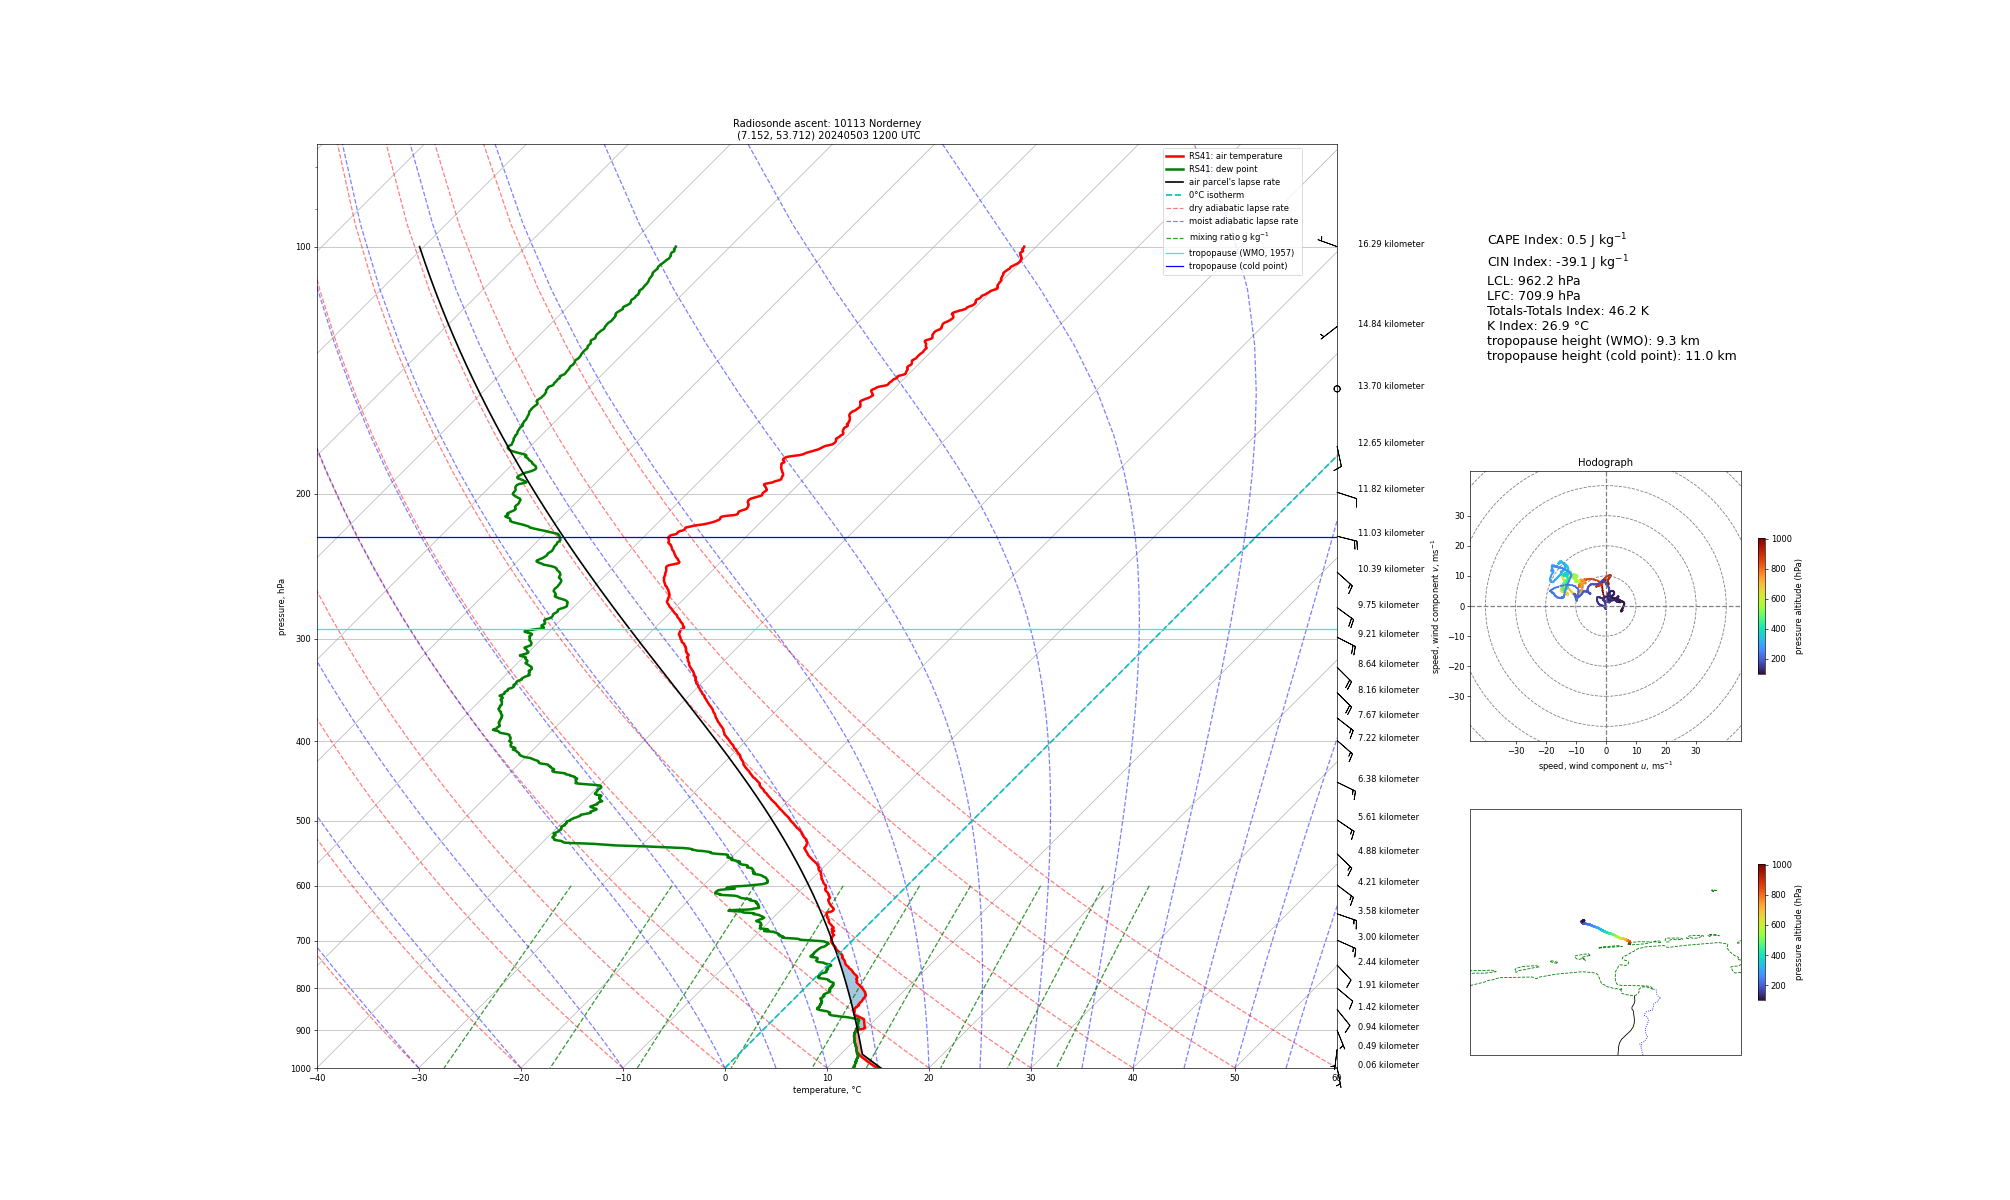 Visualisation of the radiosounding profile at Norderney at 1200 UTC